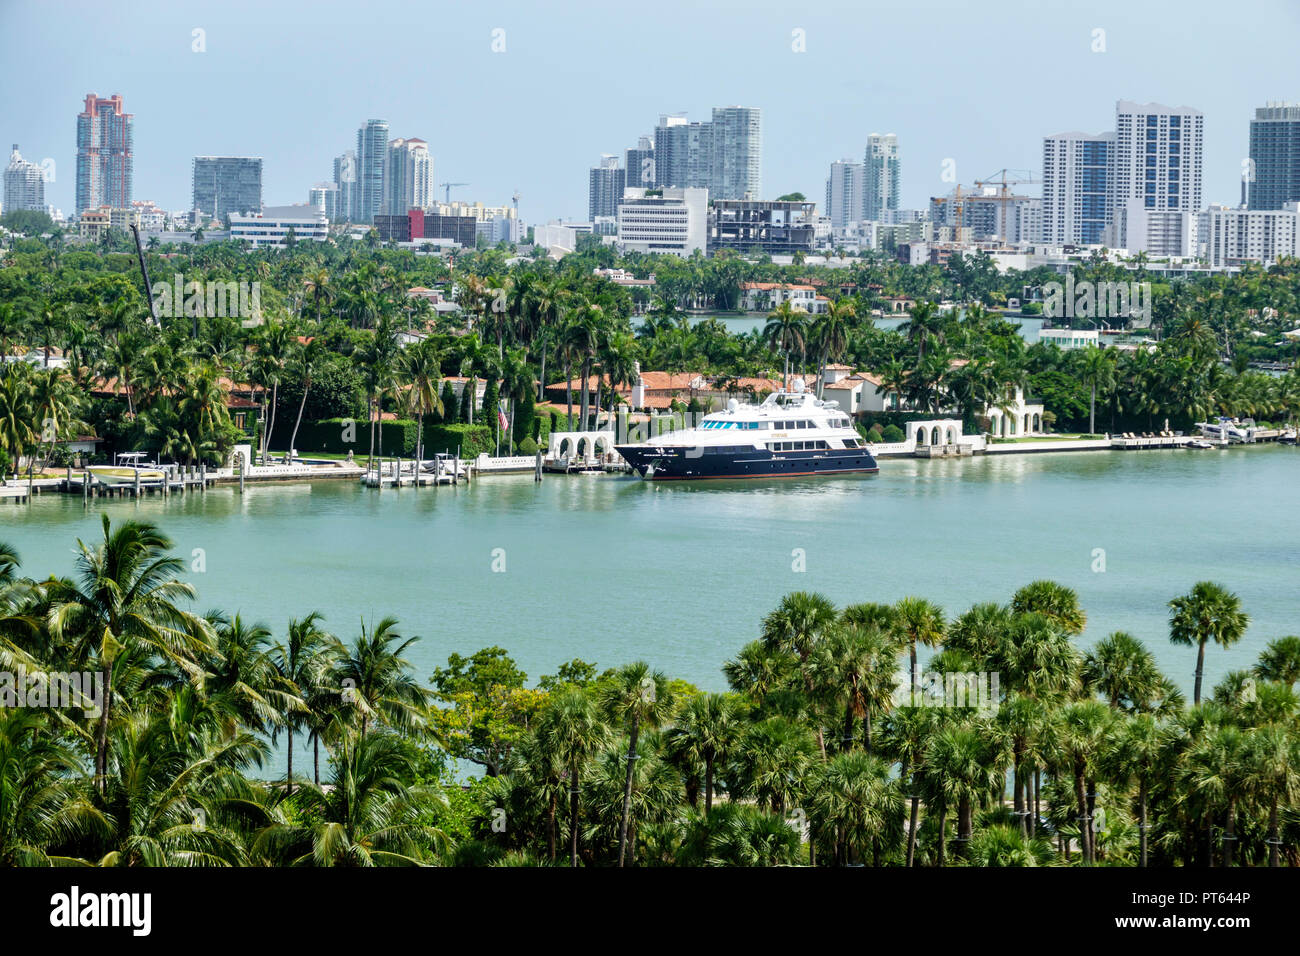 Miami Beach Florida,Biscayne Bay,waterfront homes,city skyline,palm trees,luxury super mega yacht,FL180731250 Stock Photo